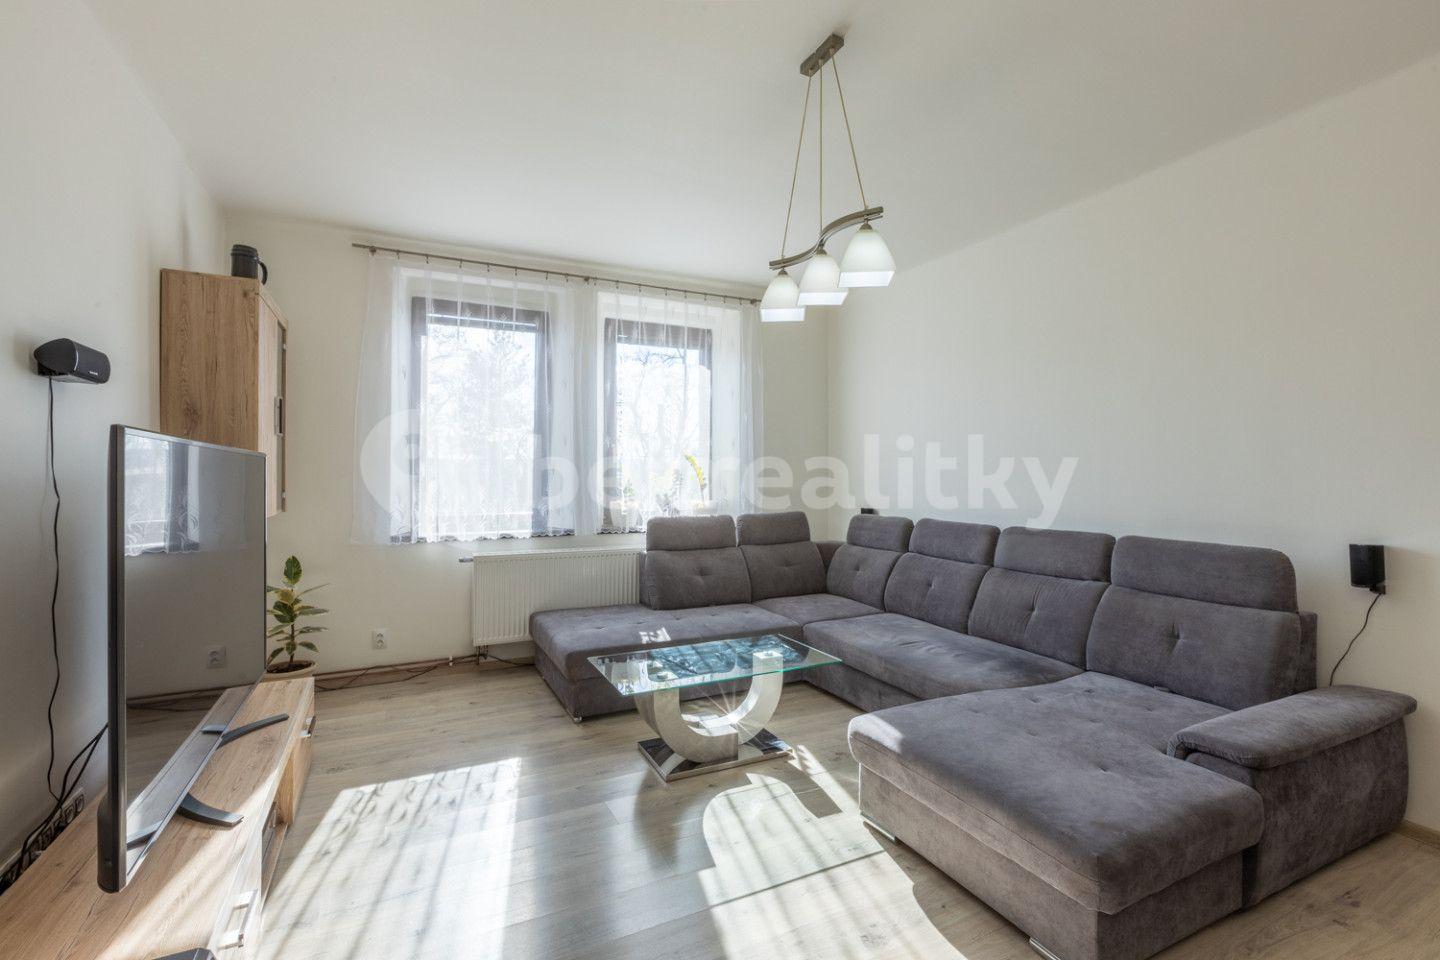 Predaj bytu 2-izbový 85 m², Šamotka, Rakovník, Středočeský kraj